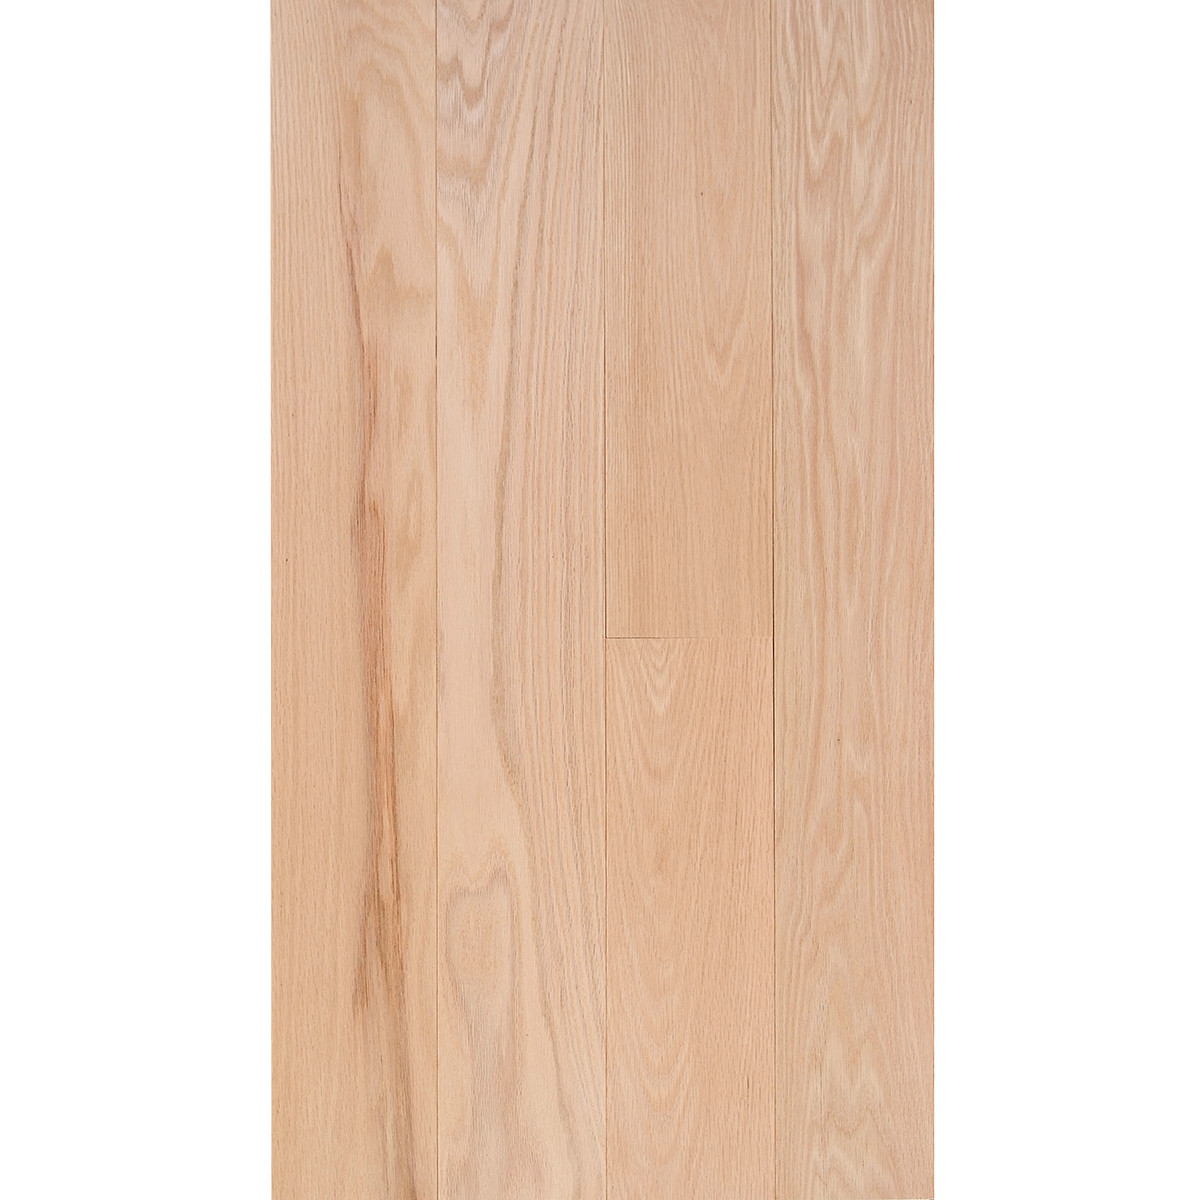 Cheap Engineered Hardwood Flooring Of Red Oak 3 4 X 5 Select Grade Flooring within Fs 5 Redoak Select Em Flooring